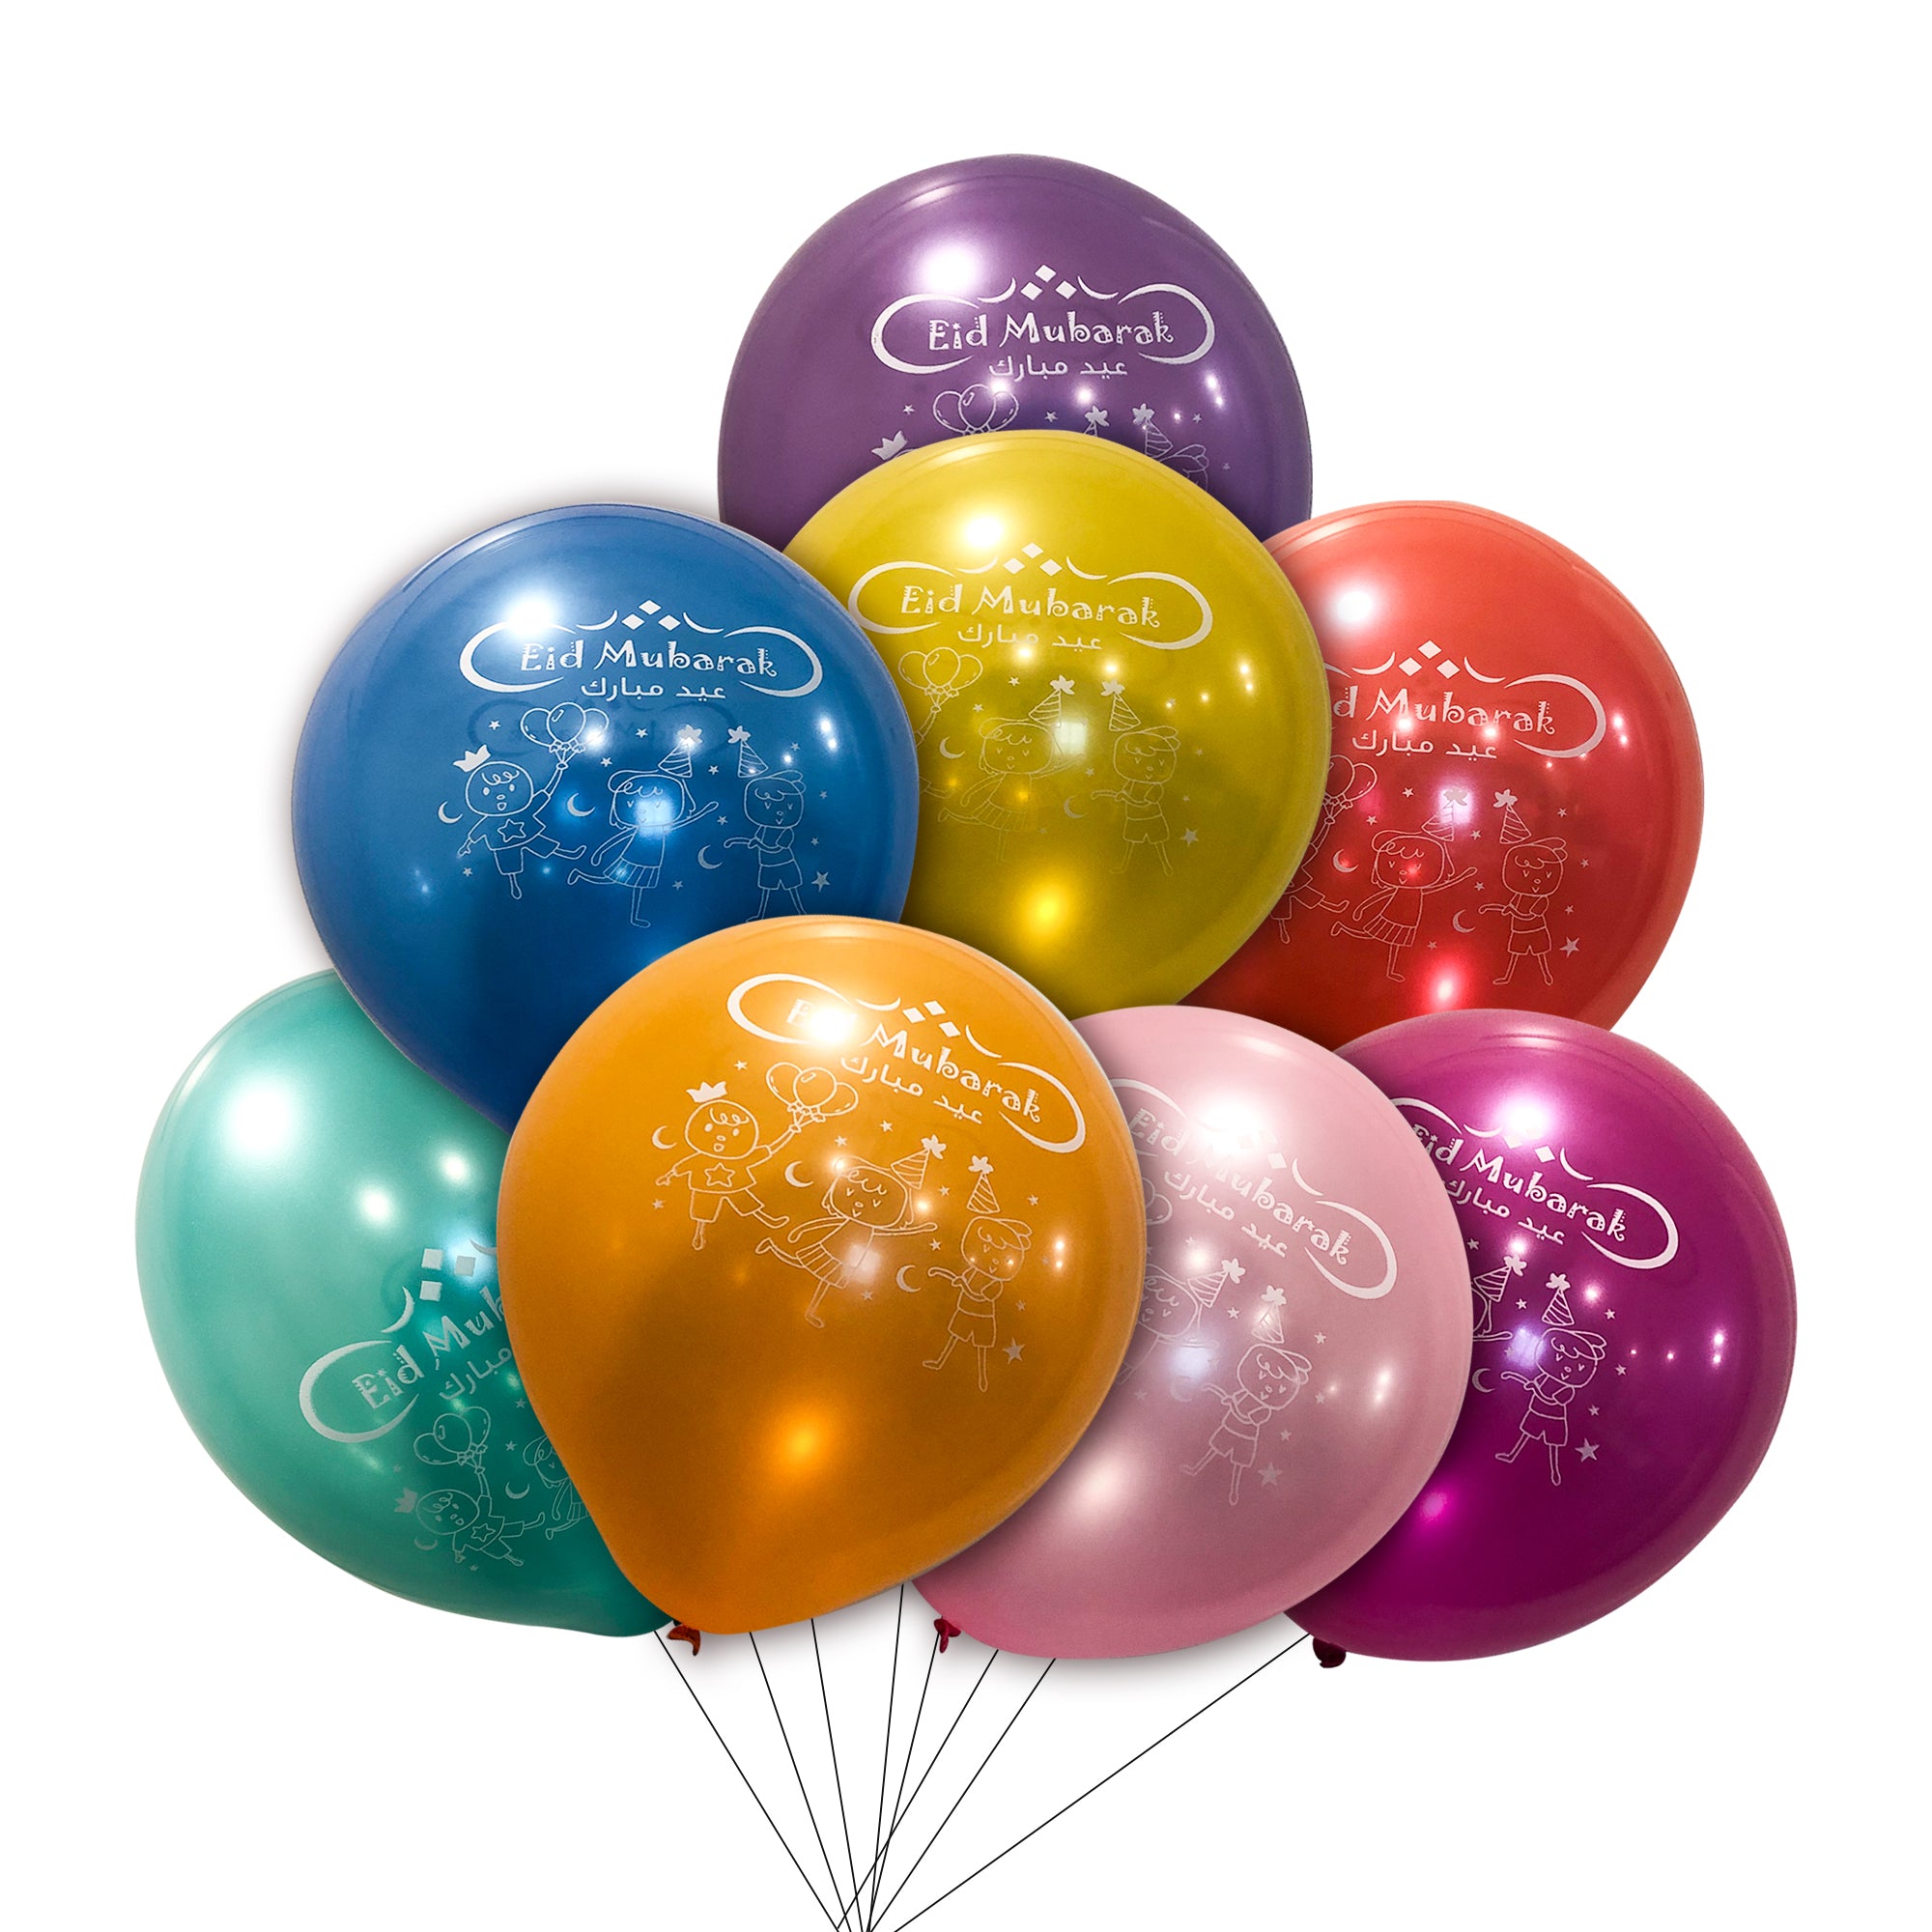 Eid Mubarak Latex Balloons (Assorted Metallic Colors, Pack of 50)